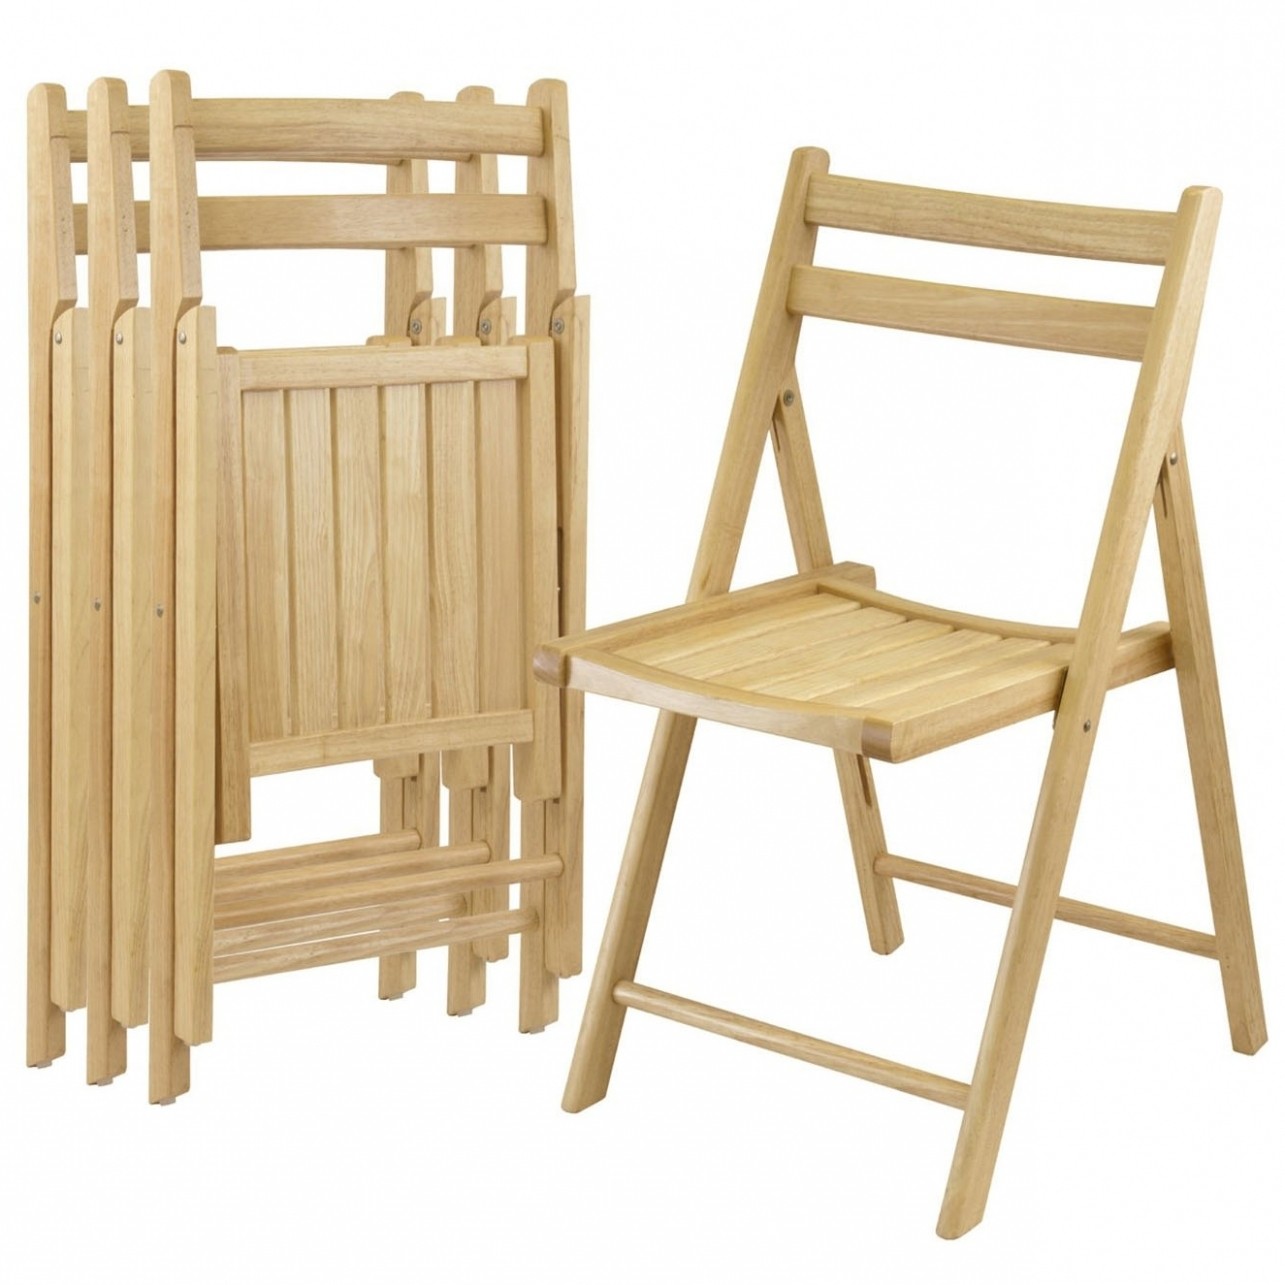 Beechwood folding chairs set of 4 modern chairs